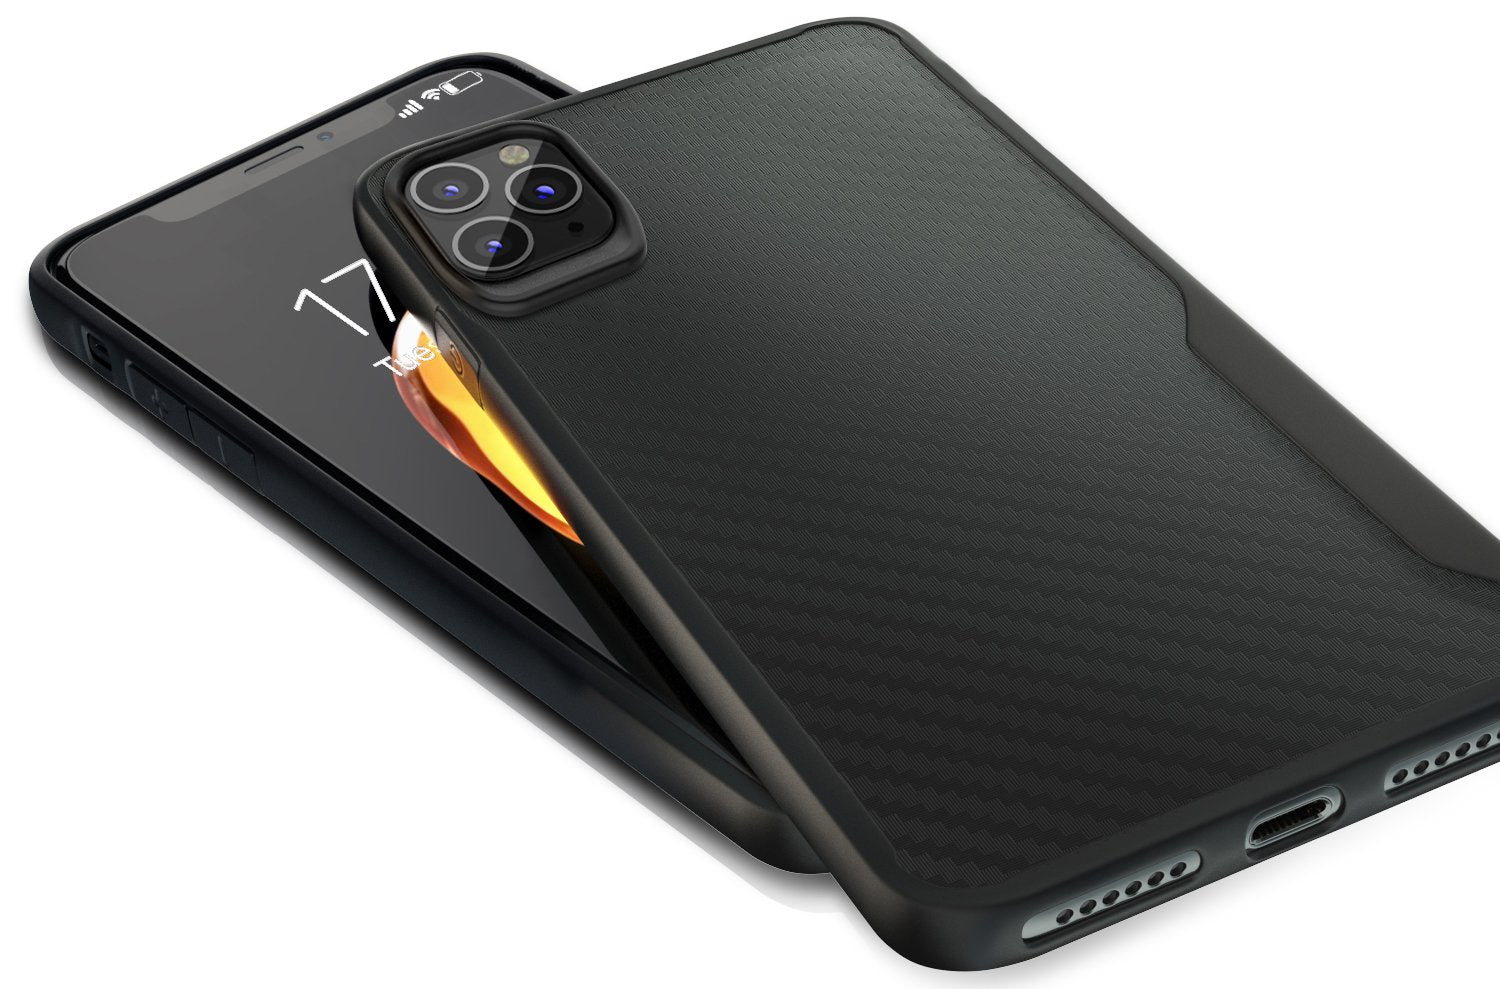 iPhone 11 Pro Max Kitoo Carbon Fiber Pattern Case Black